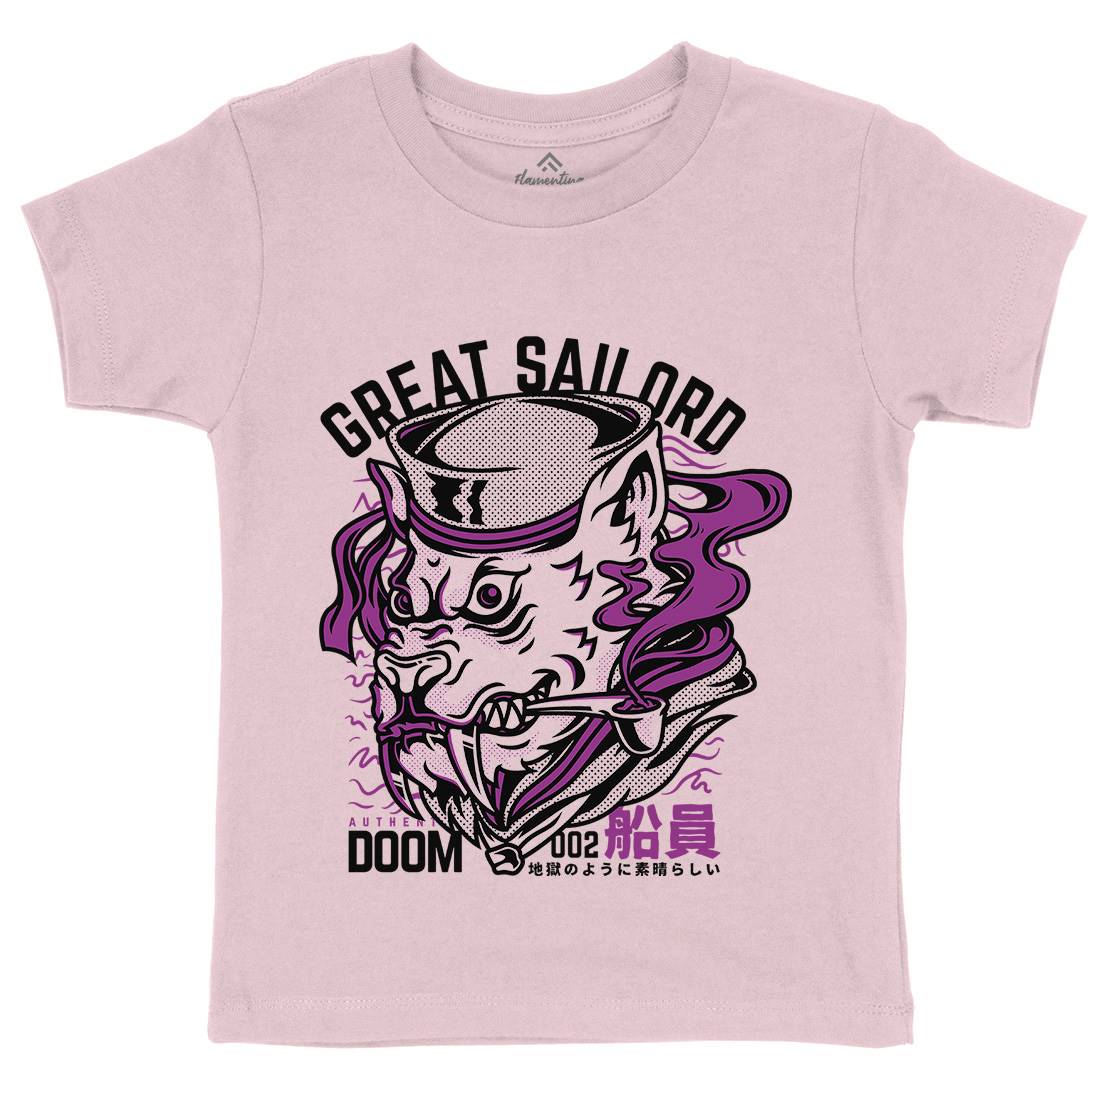 Great Sailord Kids Organic Crew Neck T-Shirt Navy D601